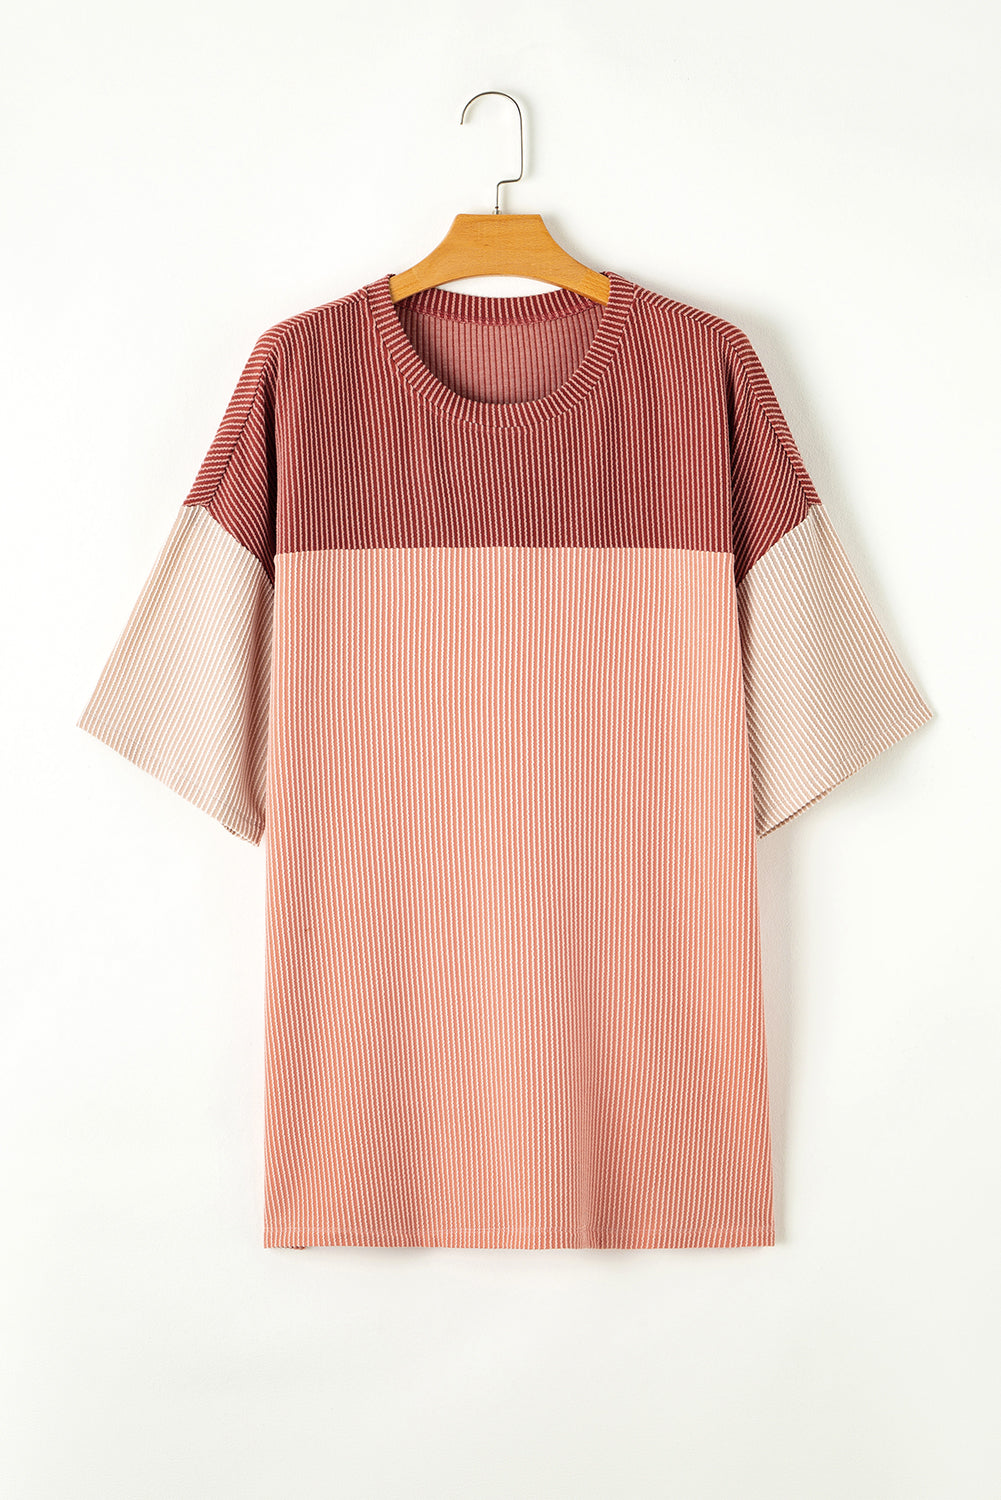 T-shirt Colorblock a coste rosa rosa taglie forti